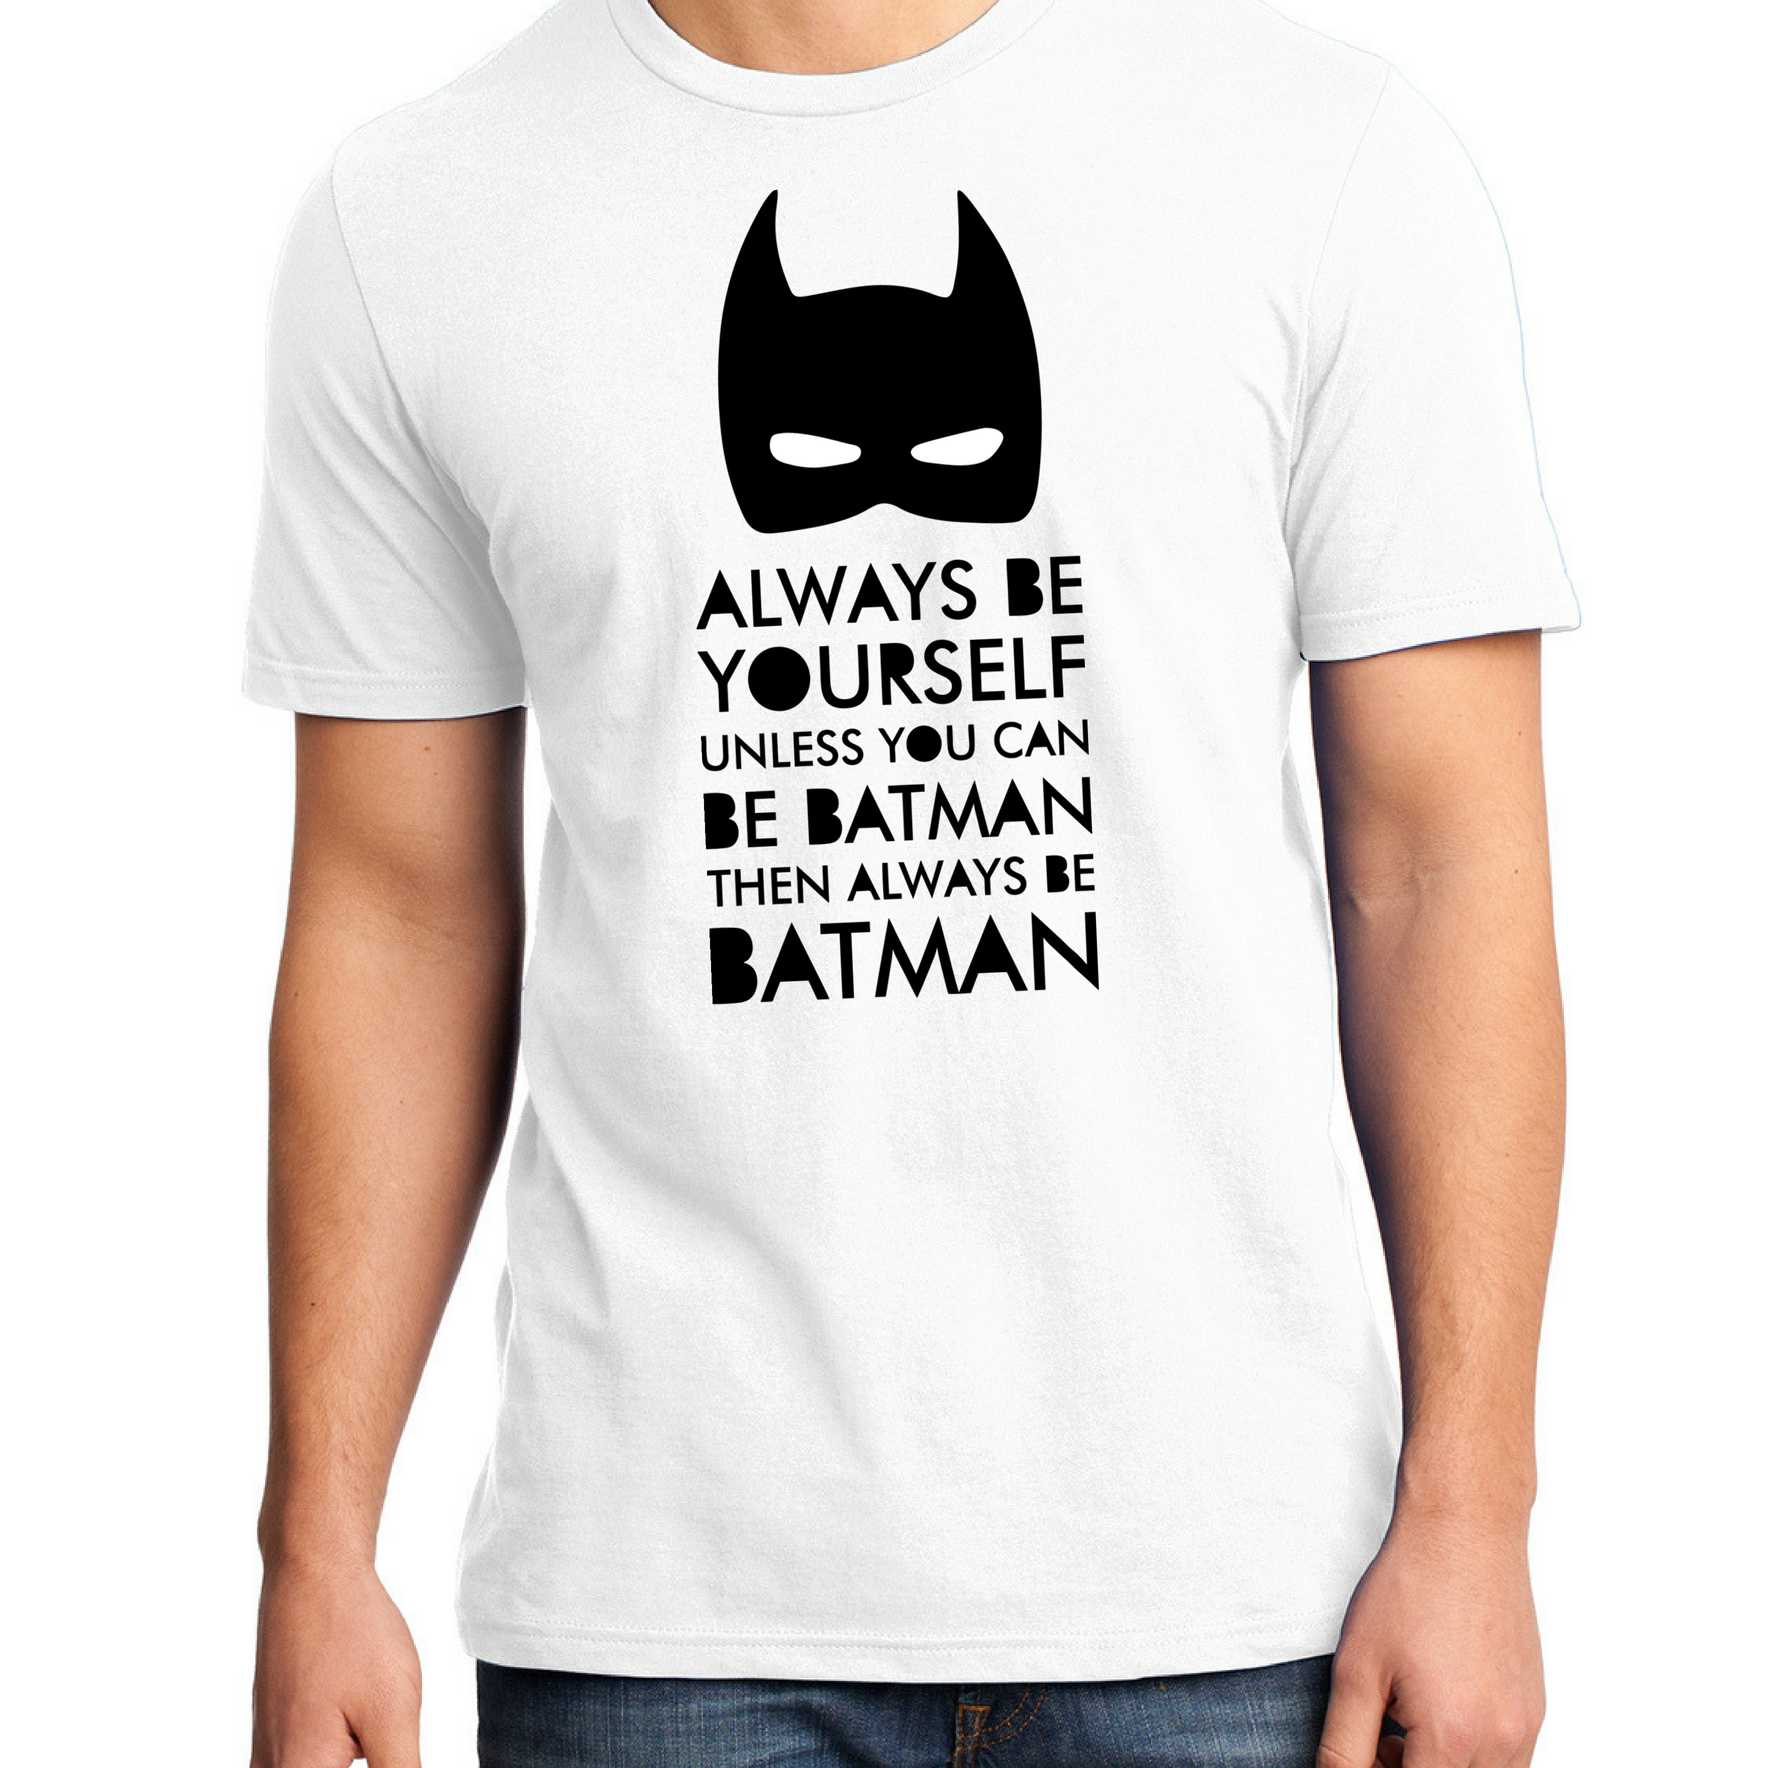 Always Be Batman Reactr Tshirts For Men - Eyewearlabs